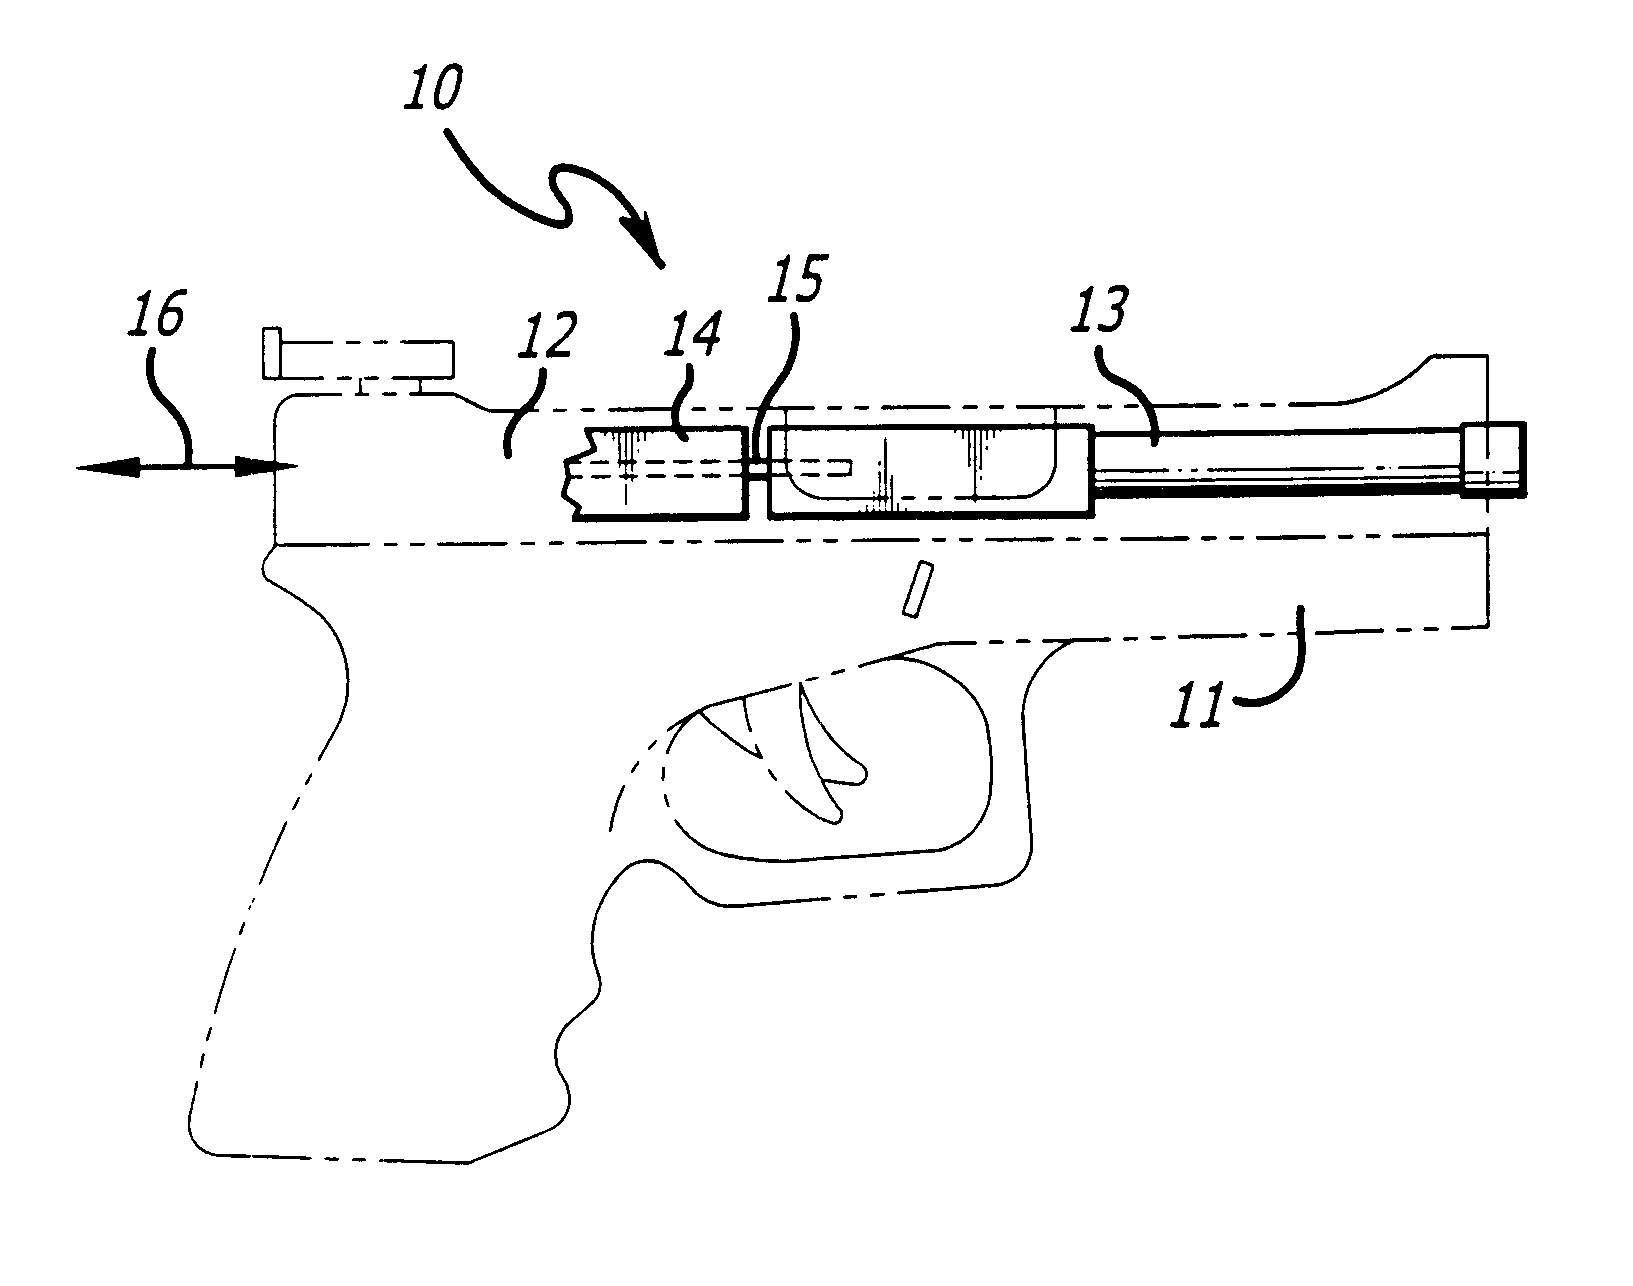 Pistol caliber conversion assembly